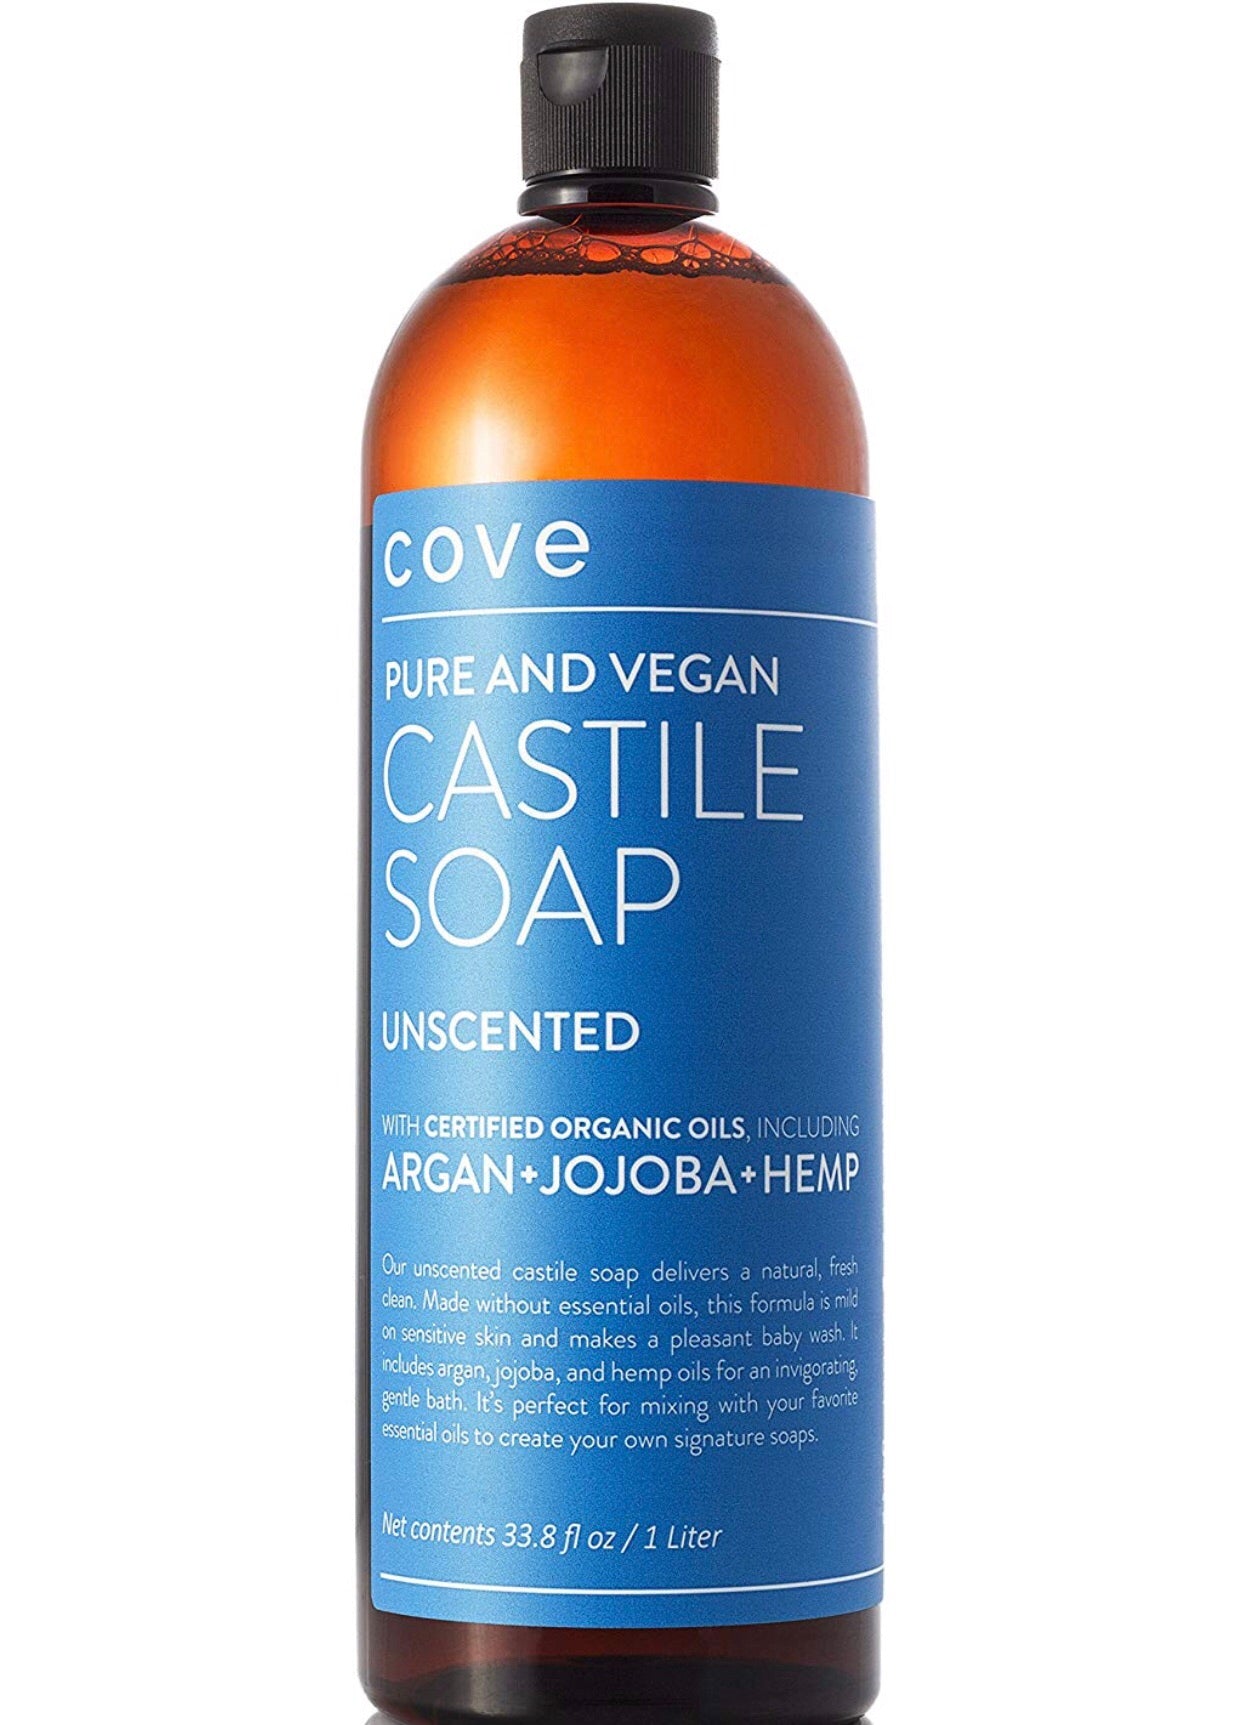 Cove Castile Soap - Unscented 1 Liter - Organic Argan, Hemp, Jojoba Oils